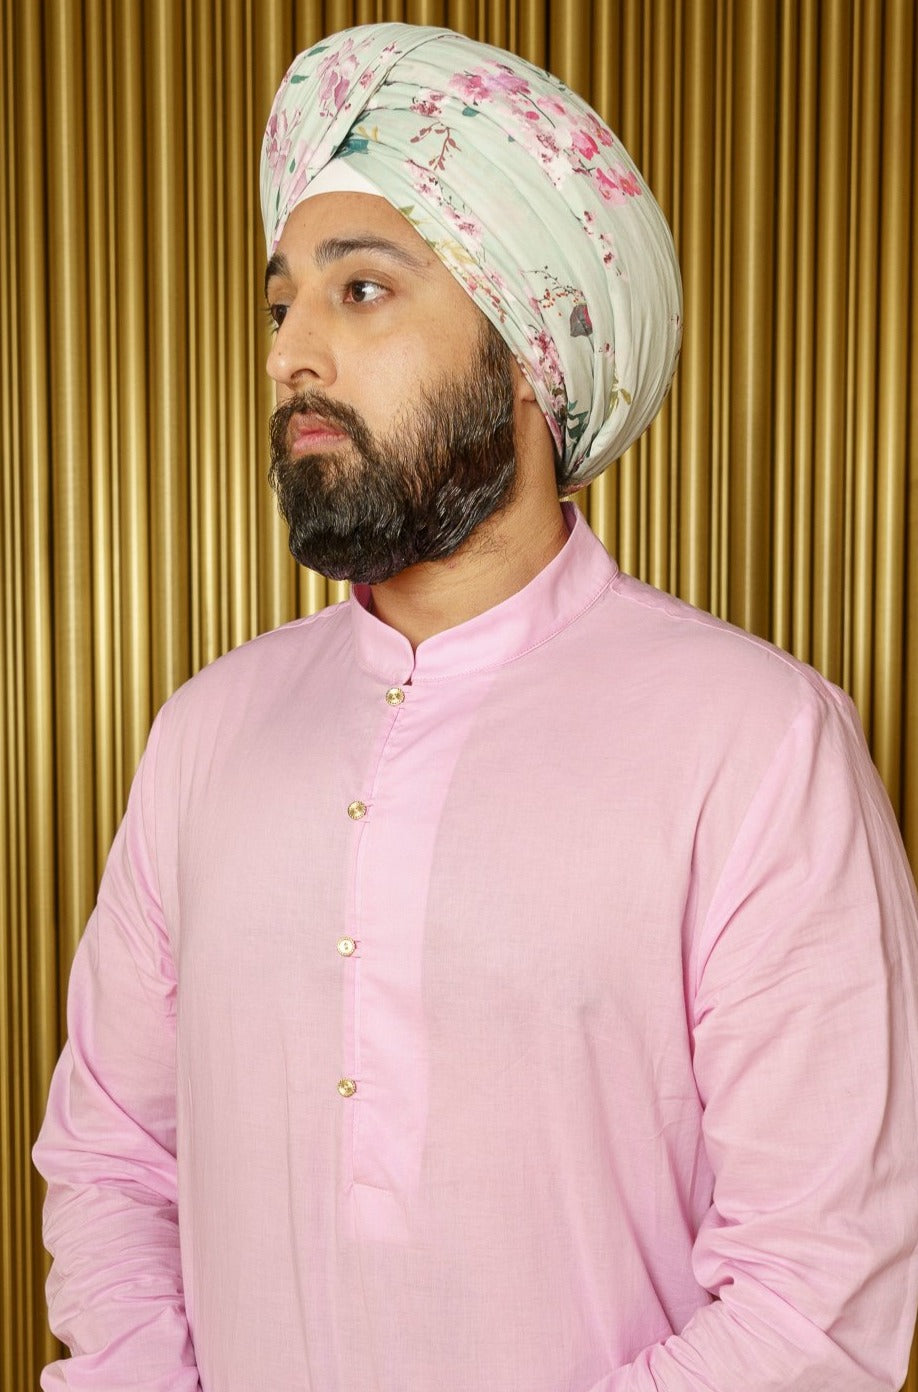 KAZ Floral Blossom Turban - Side View - Harleen Kaur - Indian Menswear